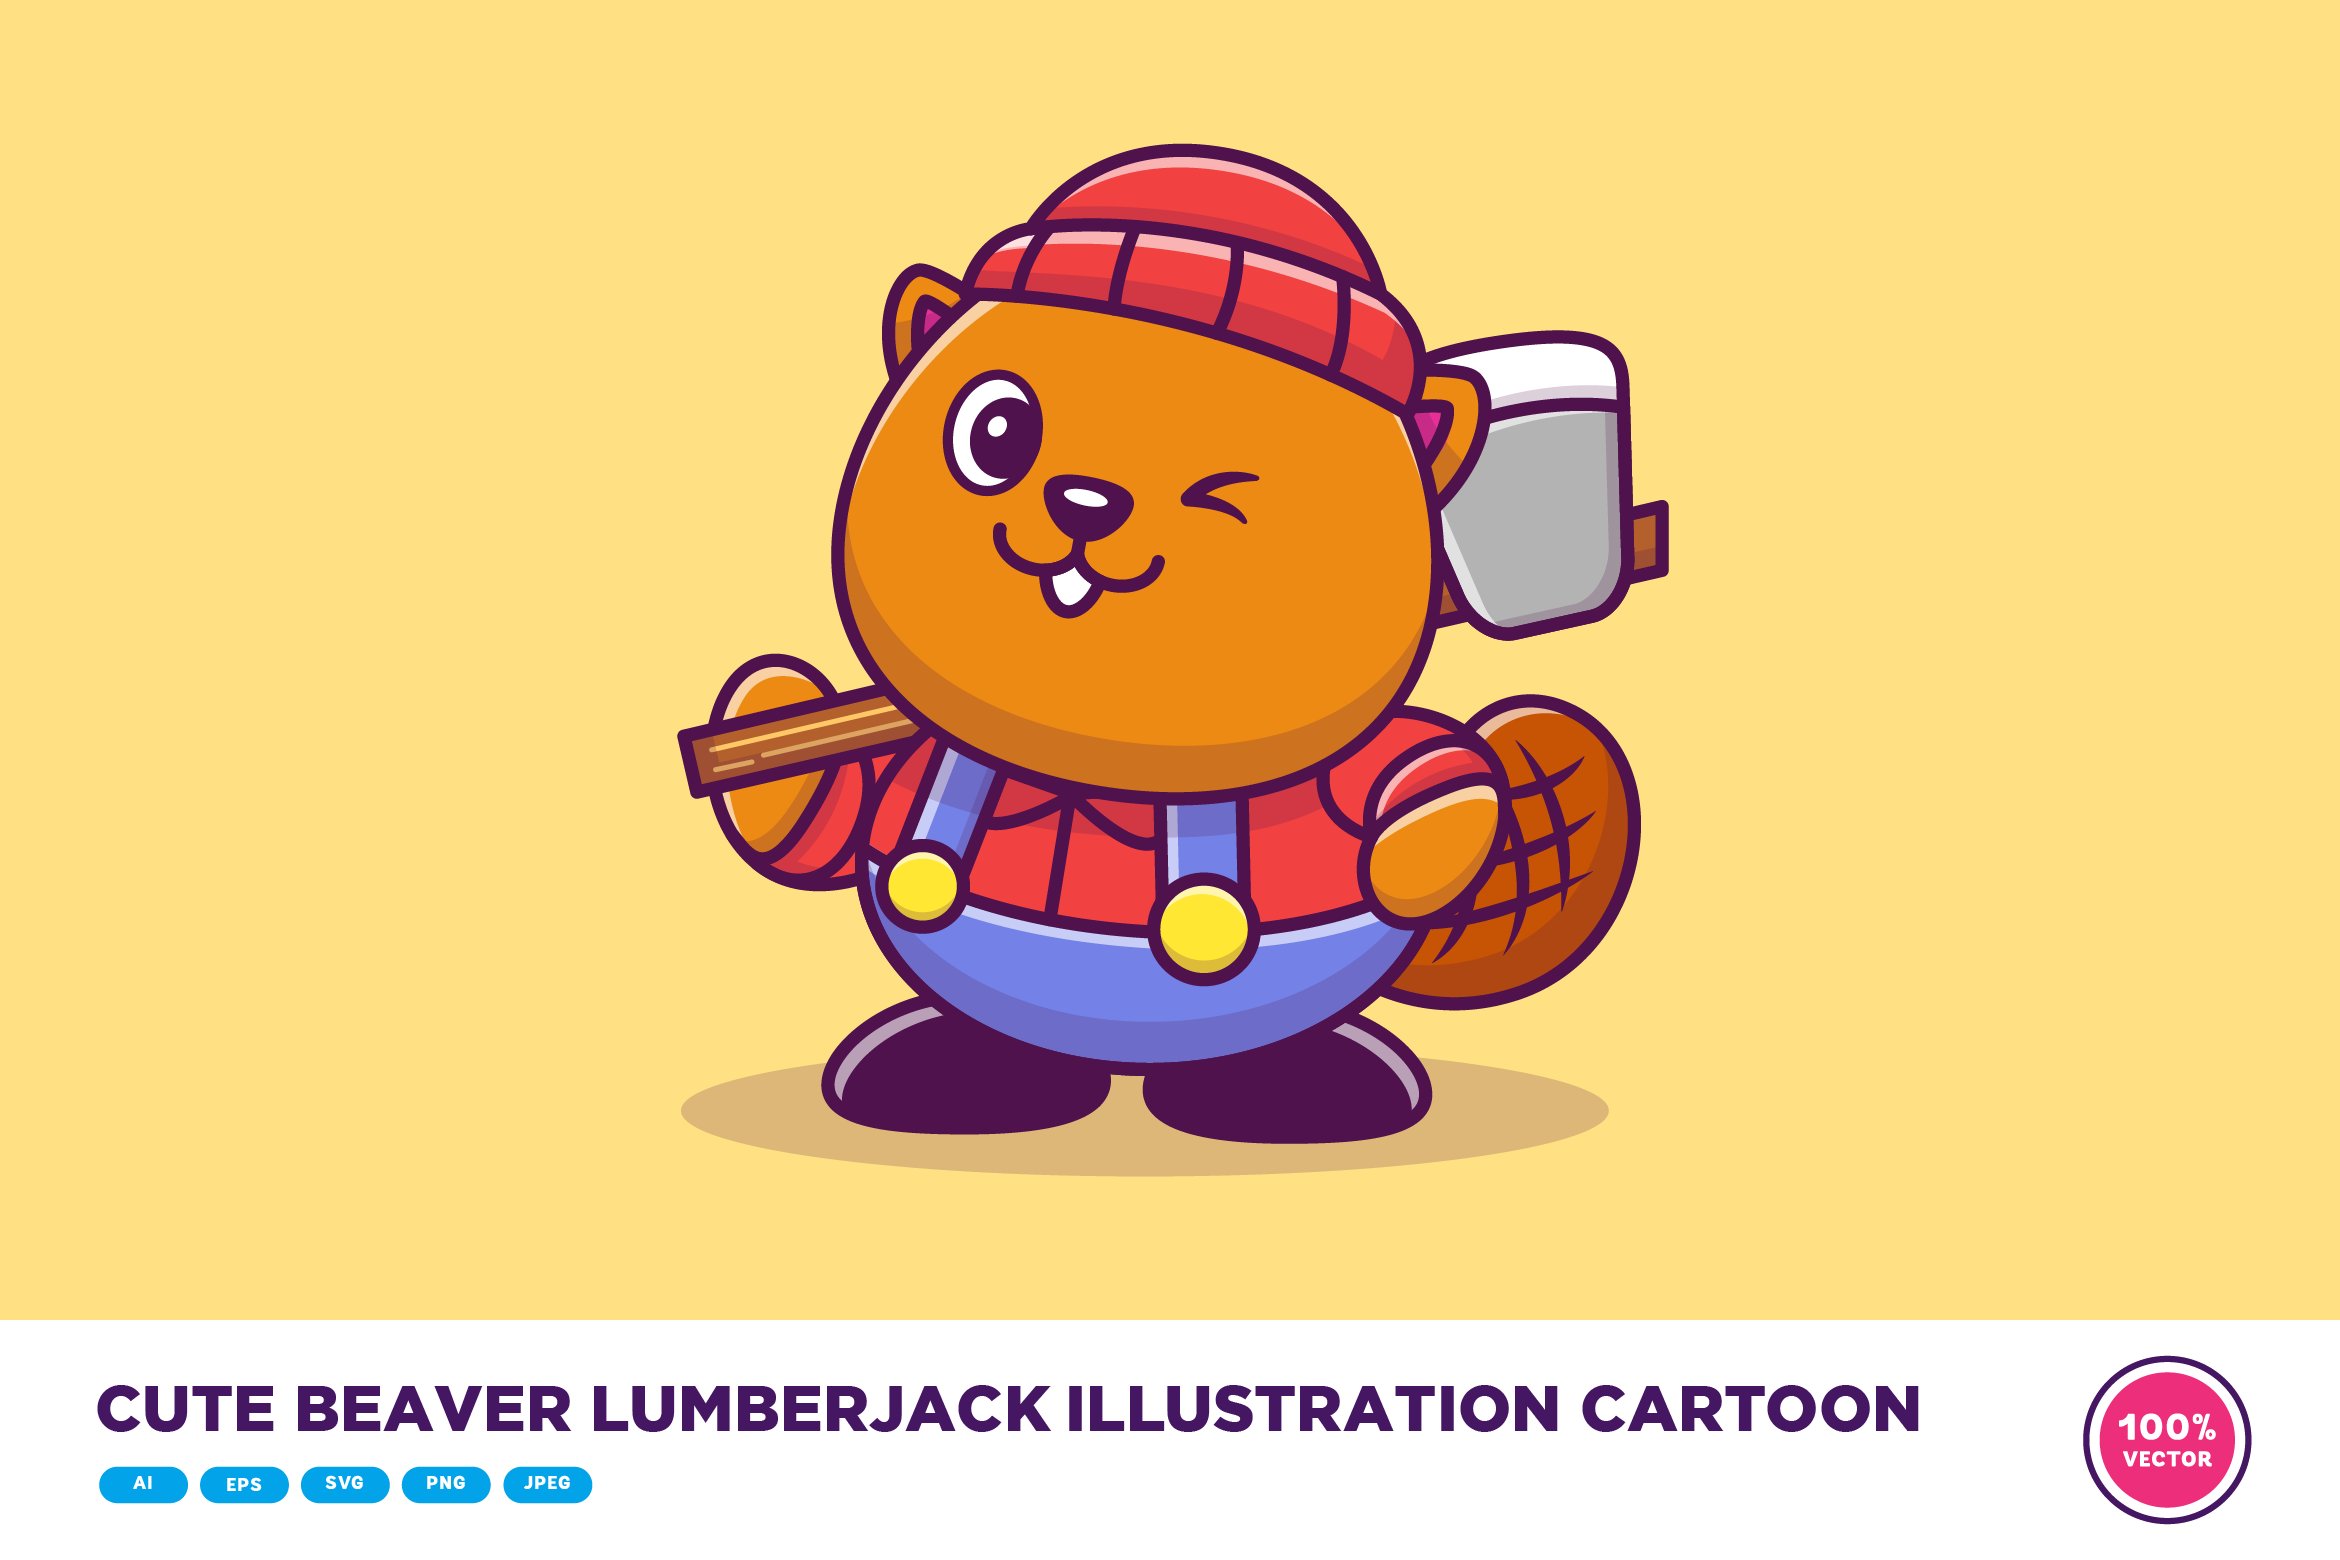 Cute Beaver Lumberjack Illustration cover image.